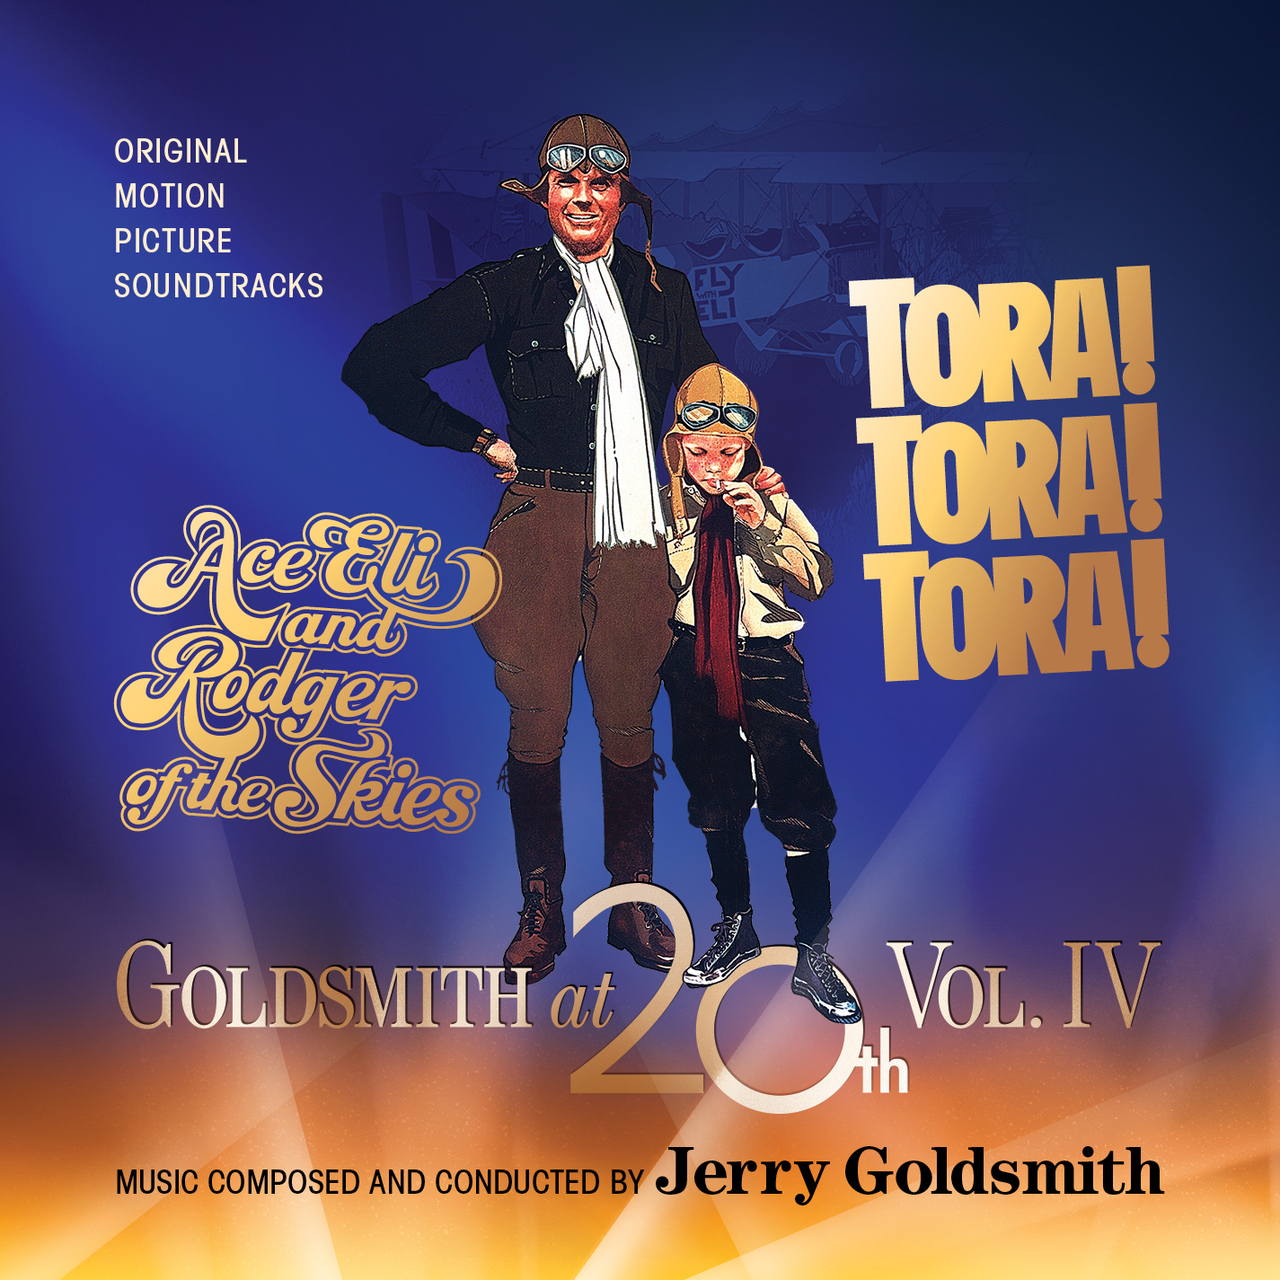 Goldsmith At 20th Vol. IV  Ace Eli And Rodger Of The Skies / Tora! Tora! Tora!